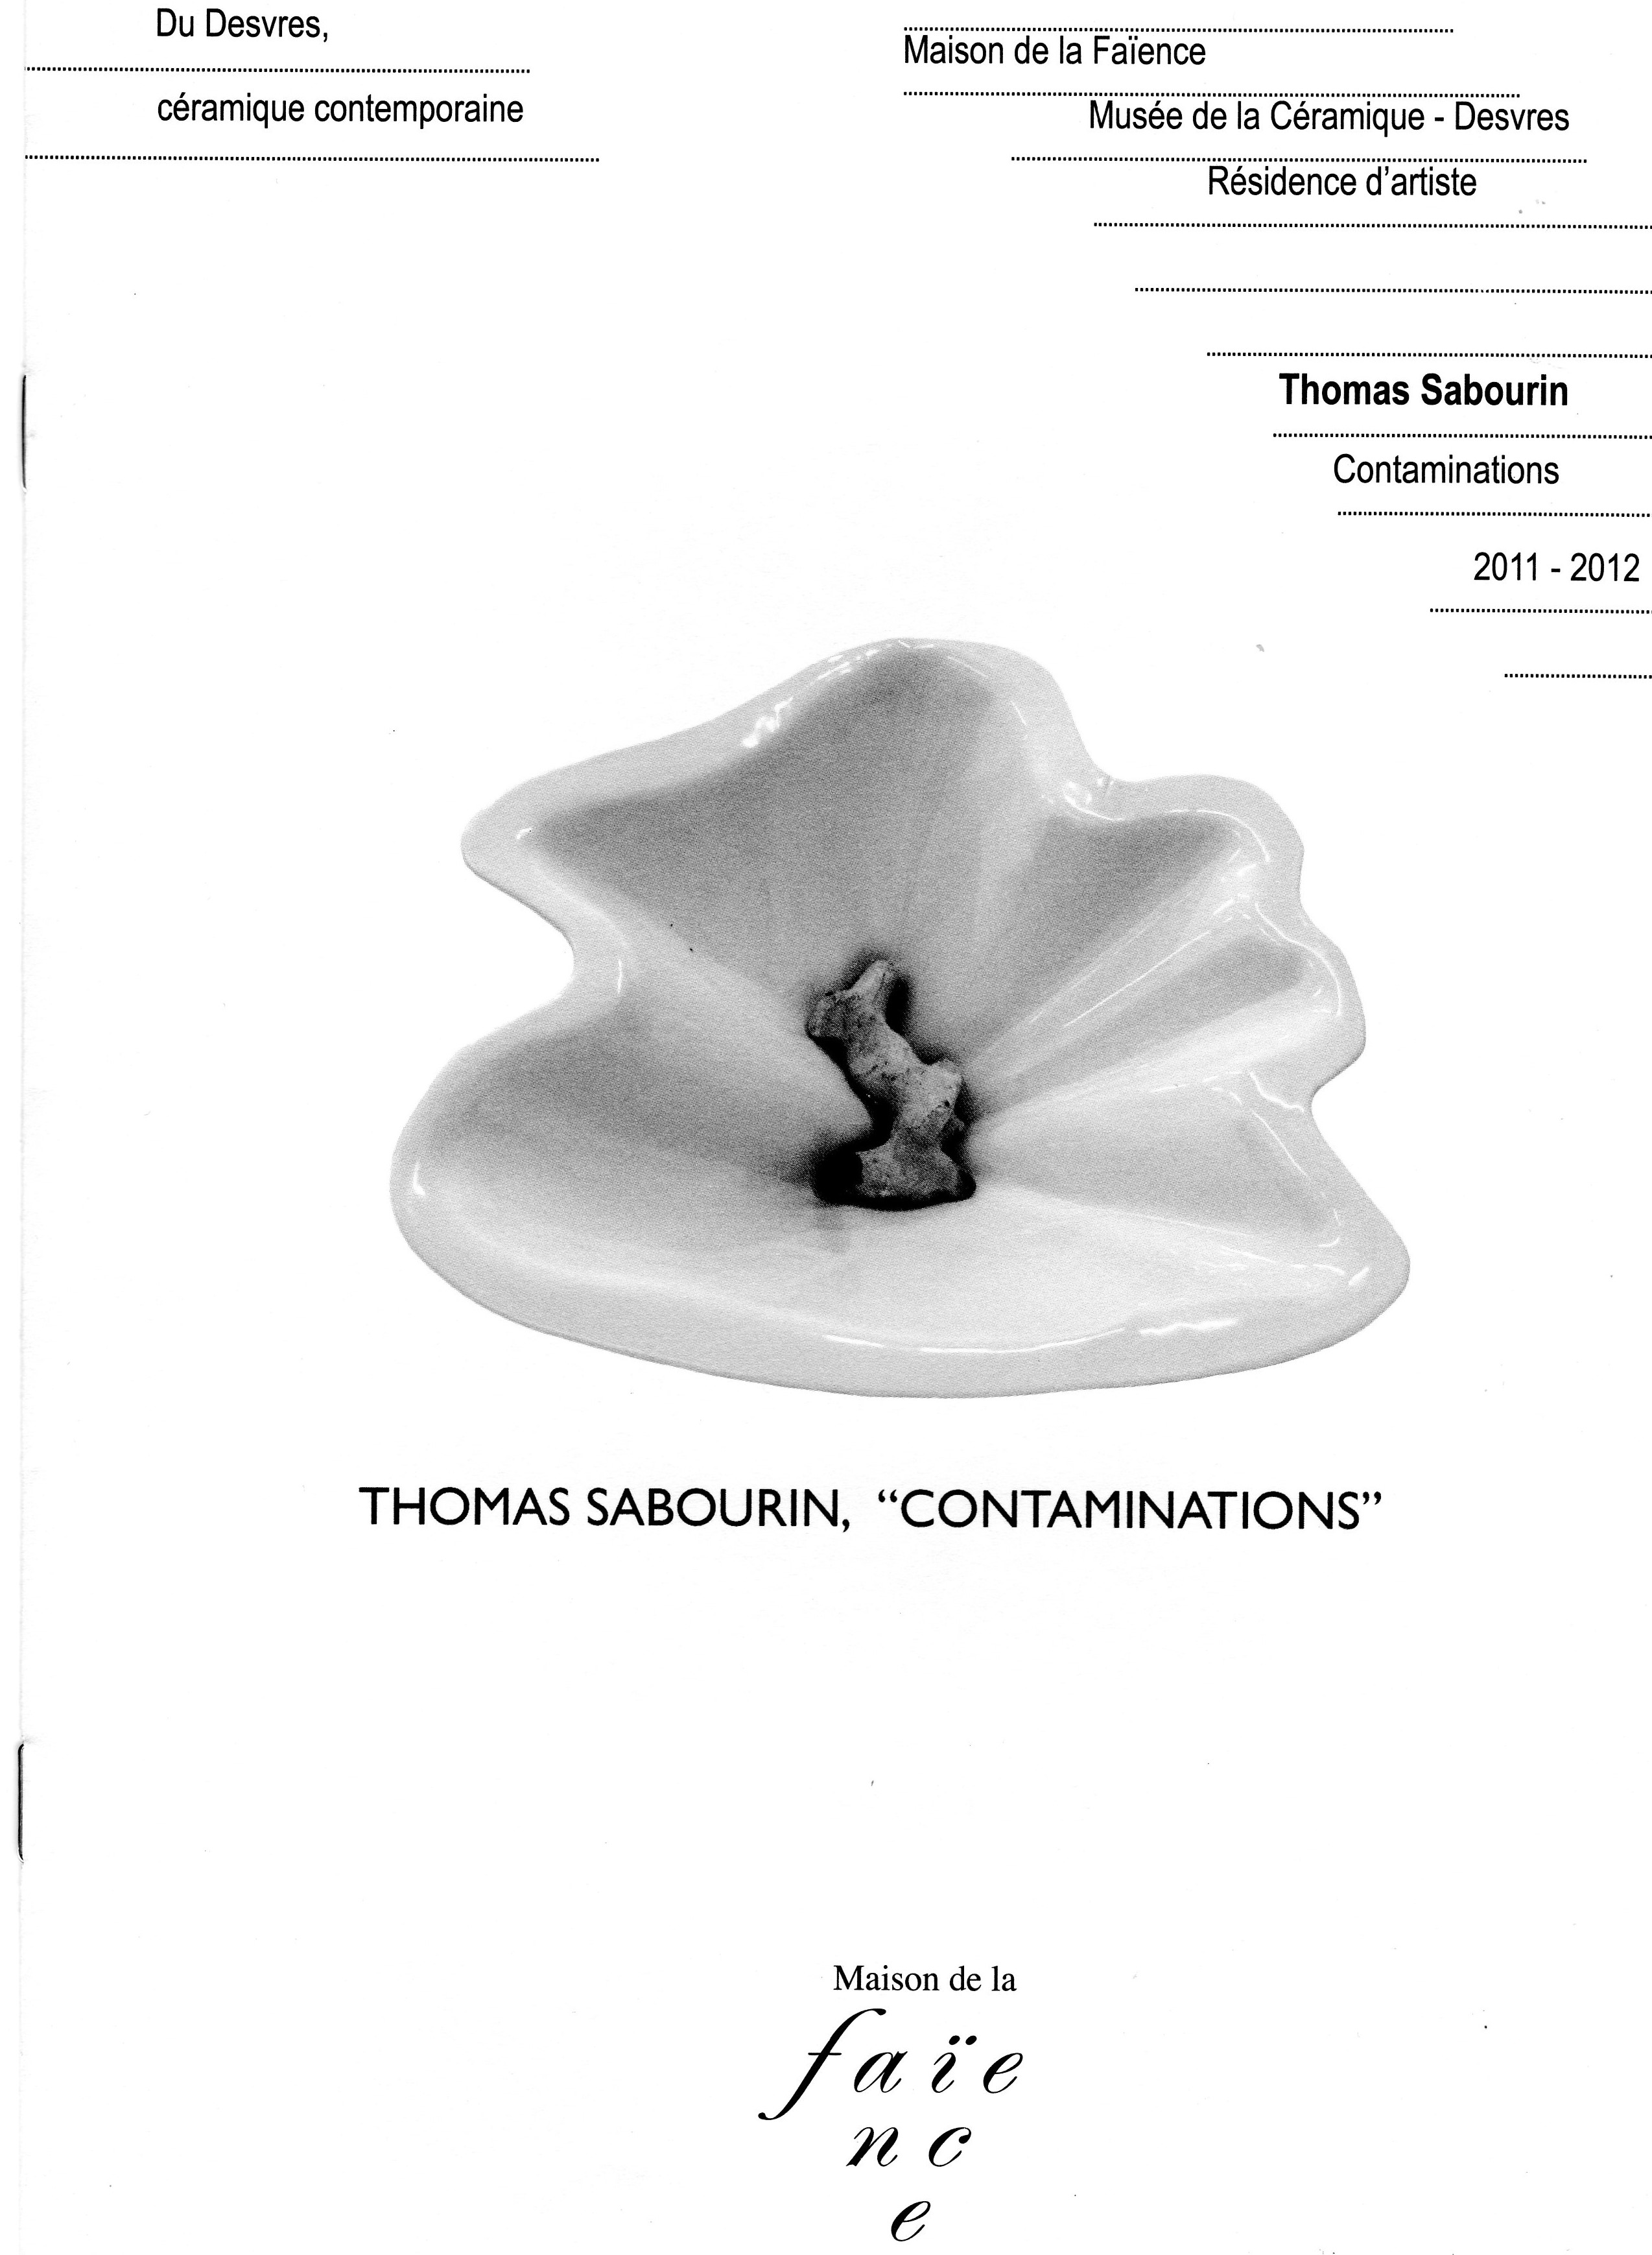 Thomas sabourin